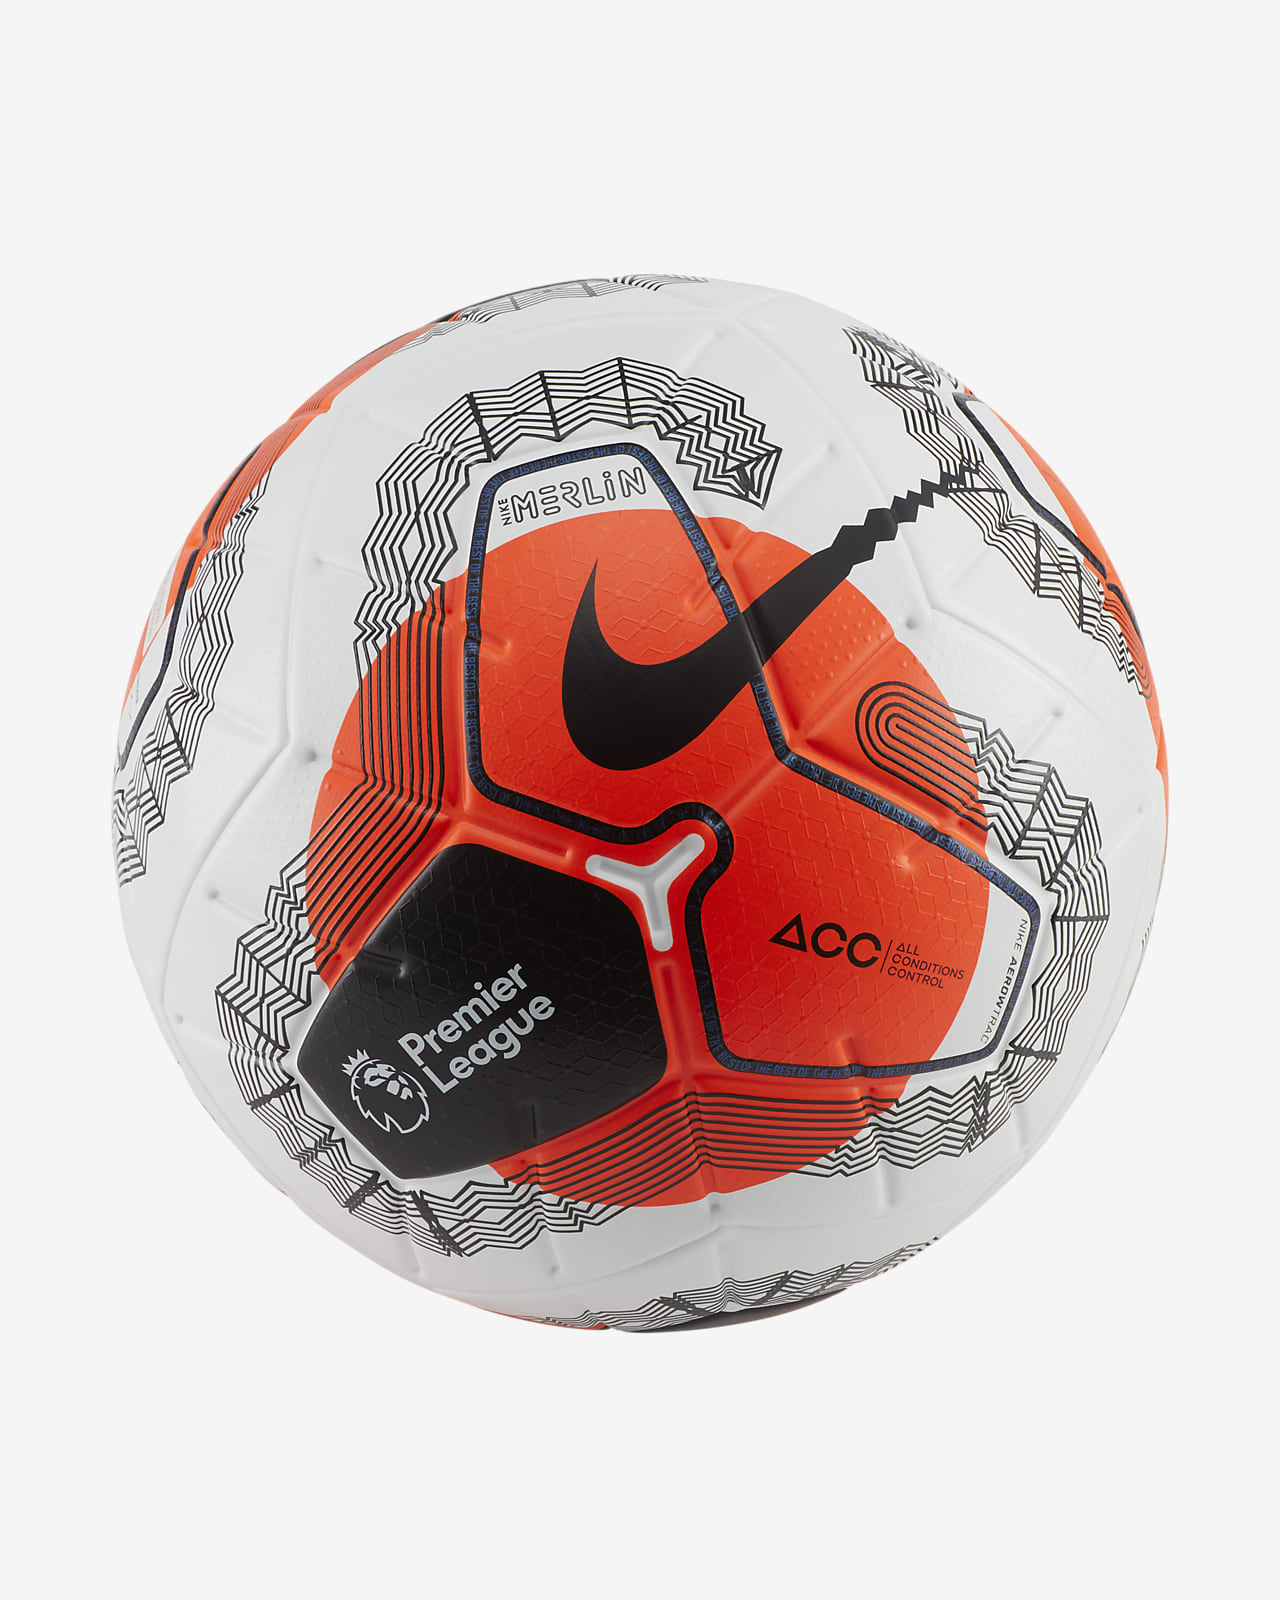 Balón de fútbol Premier League Tunnel Vision Merlin. Nike.com